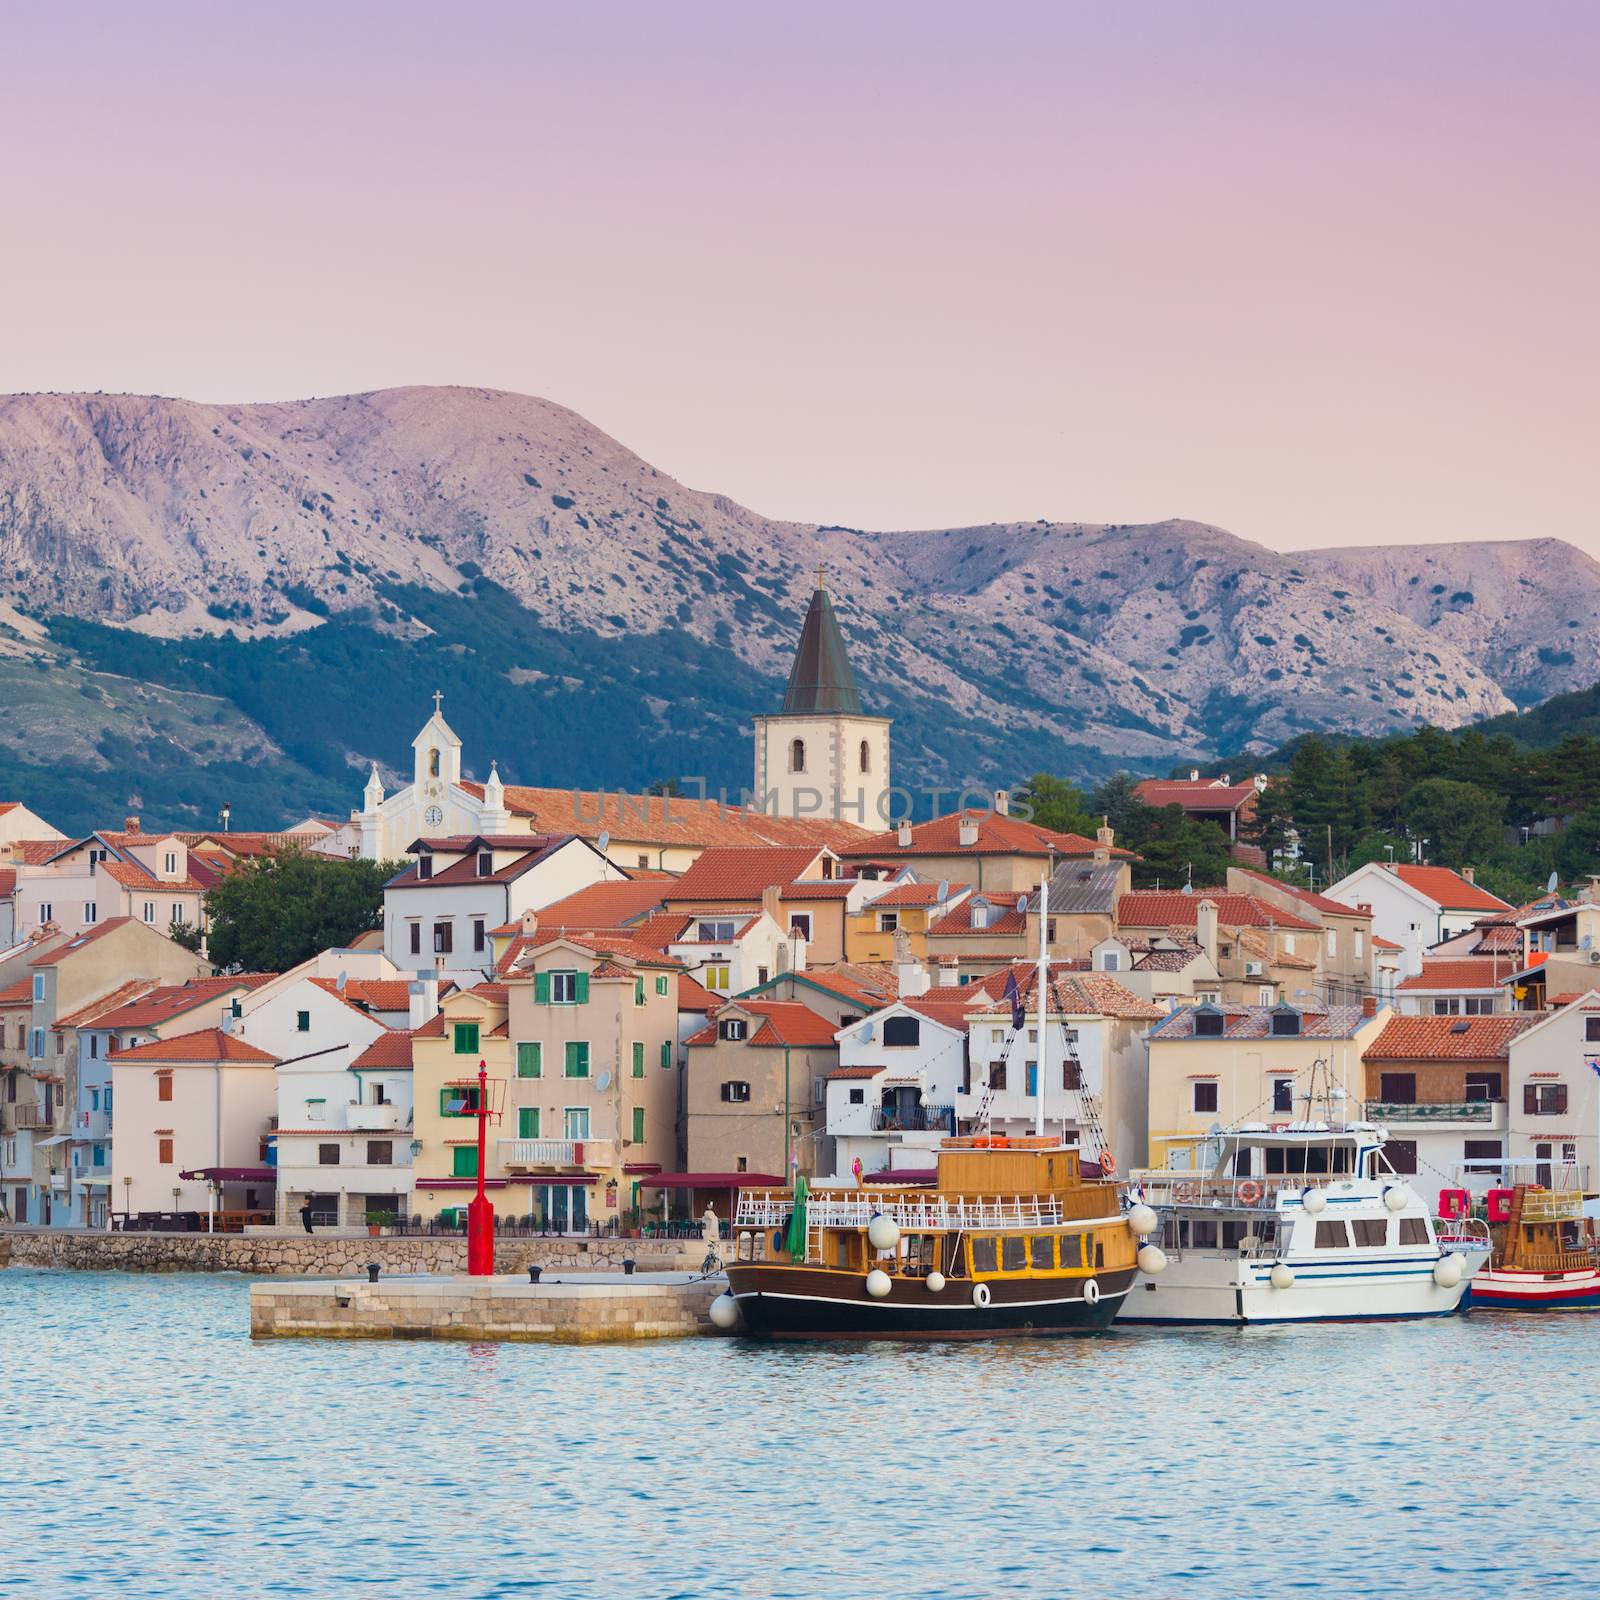 Panoramic view of Baska town, popular touristic destination on island Krk Croatia Europe.